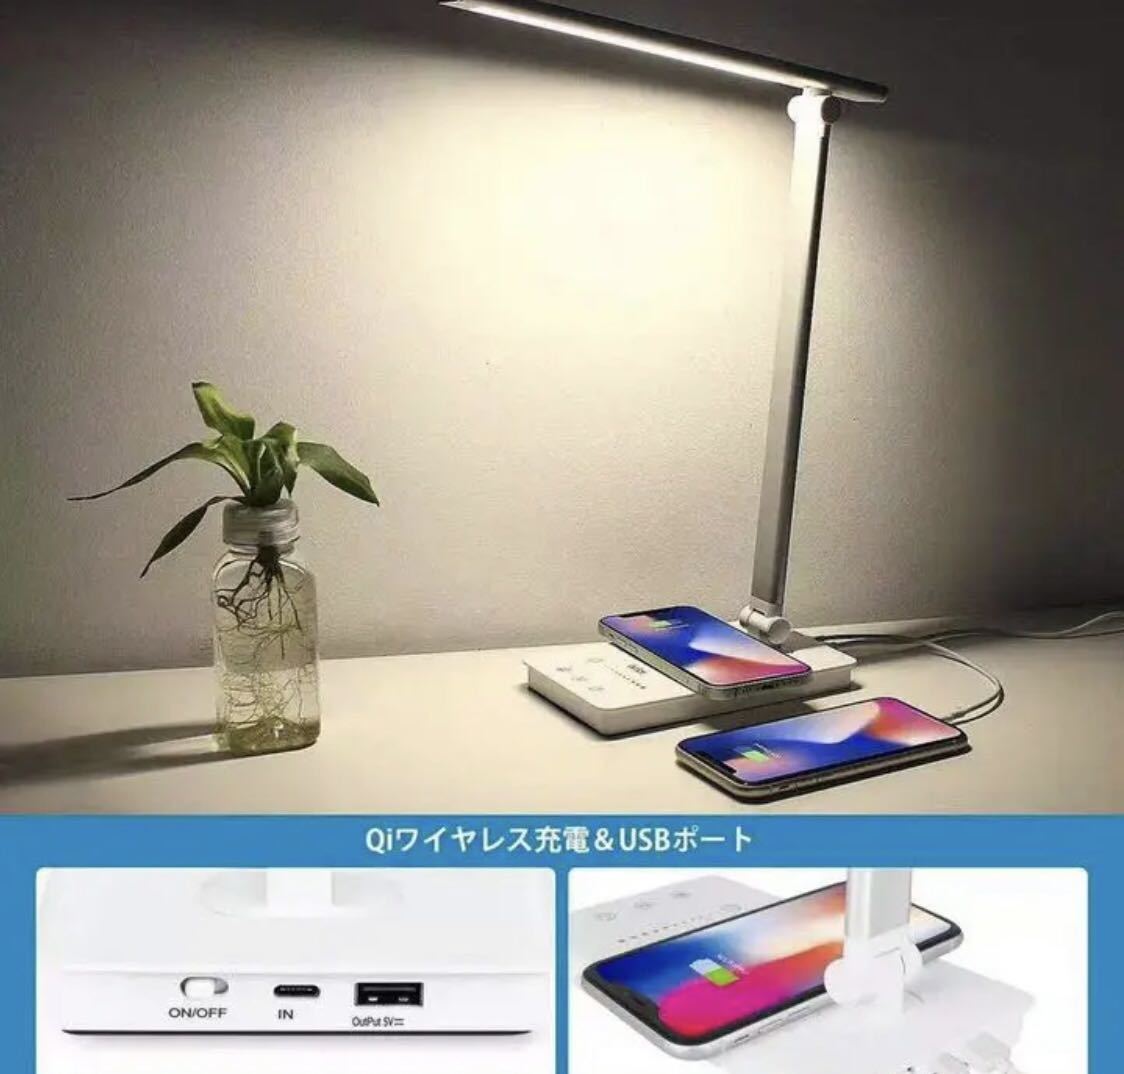 LED デスクライト Qiワイヤレス充電 対応 USB充電ポート付 電気スタンド_画像1